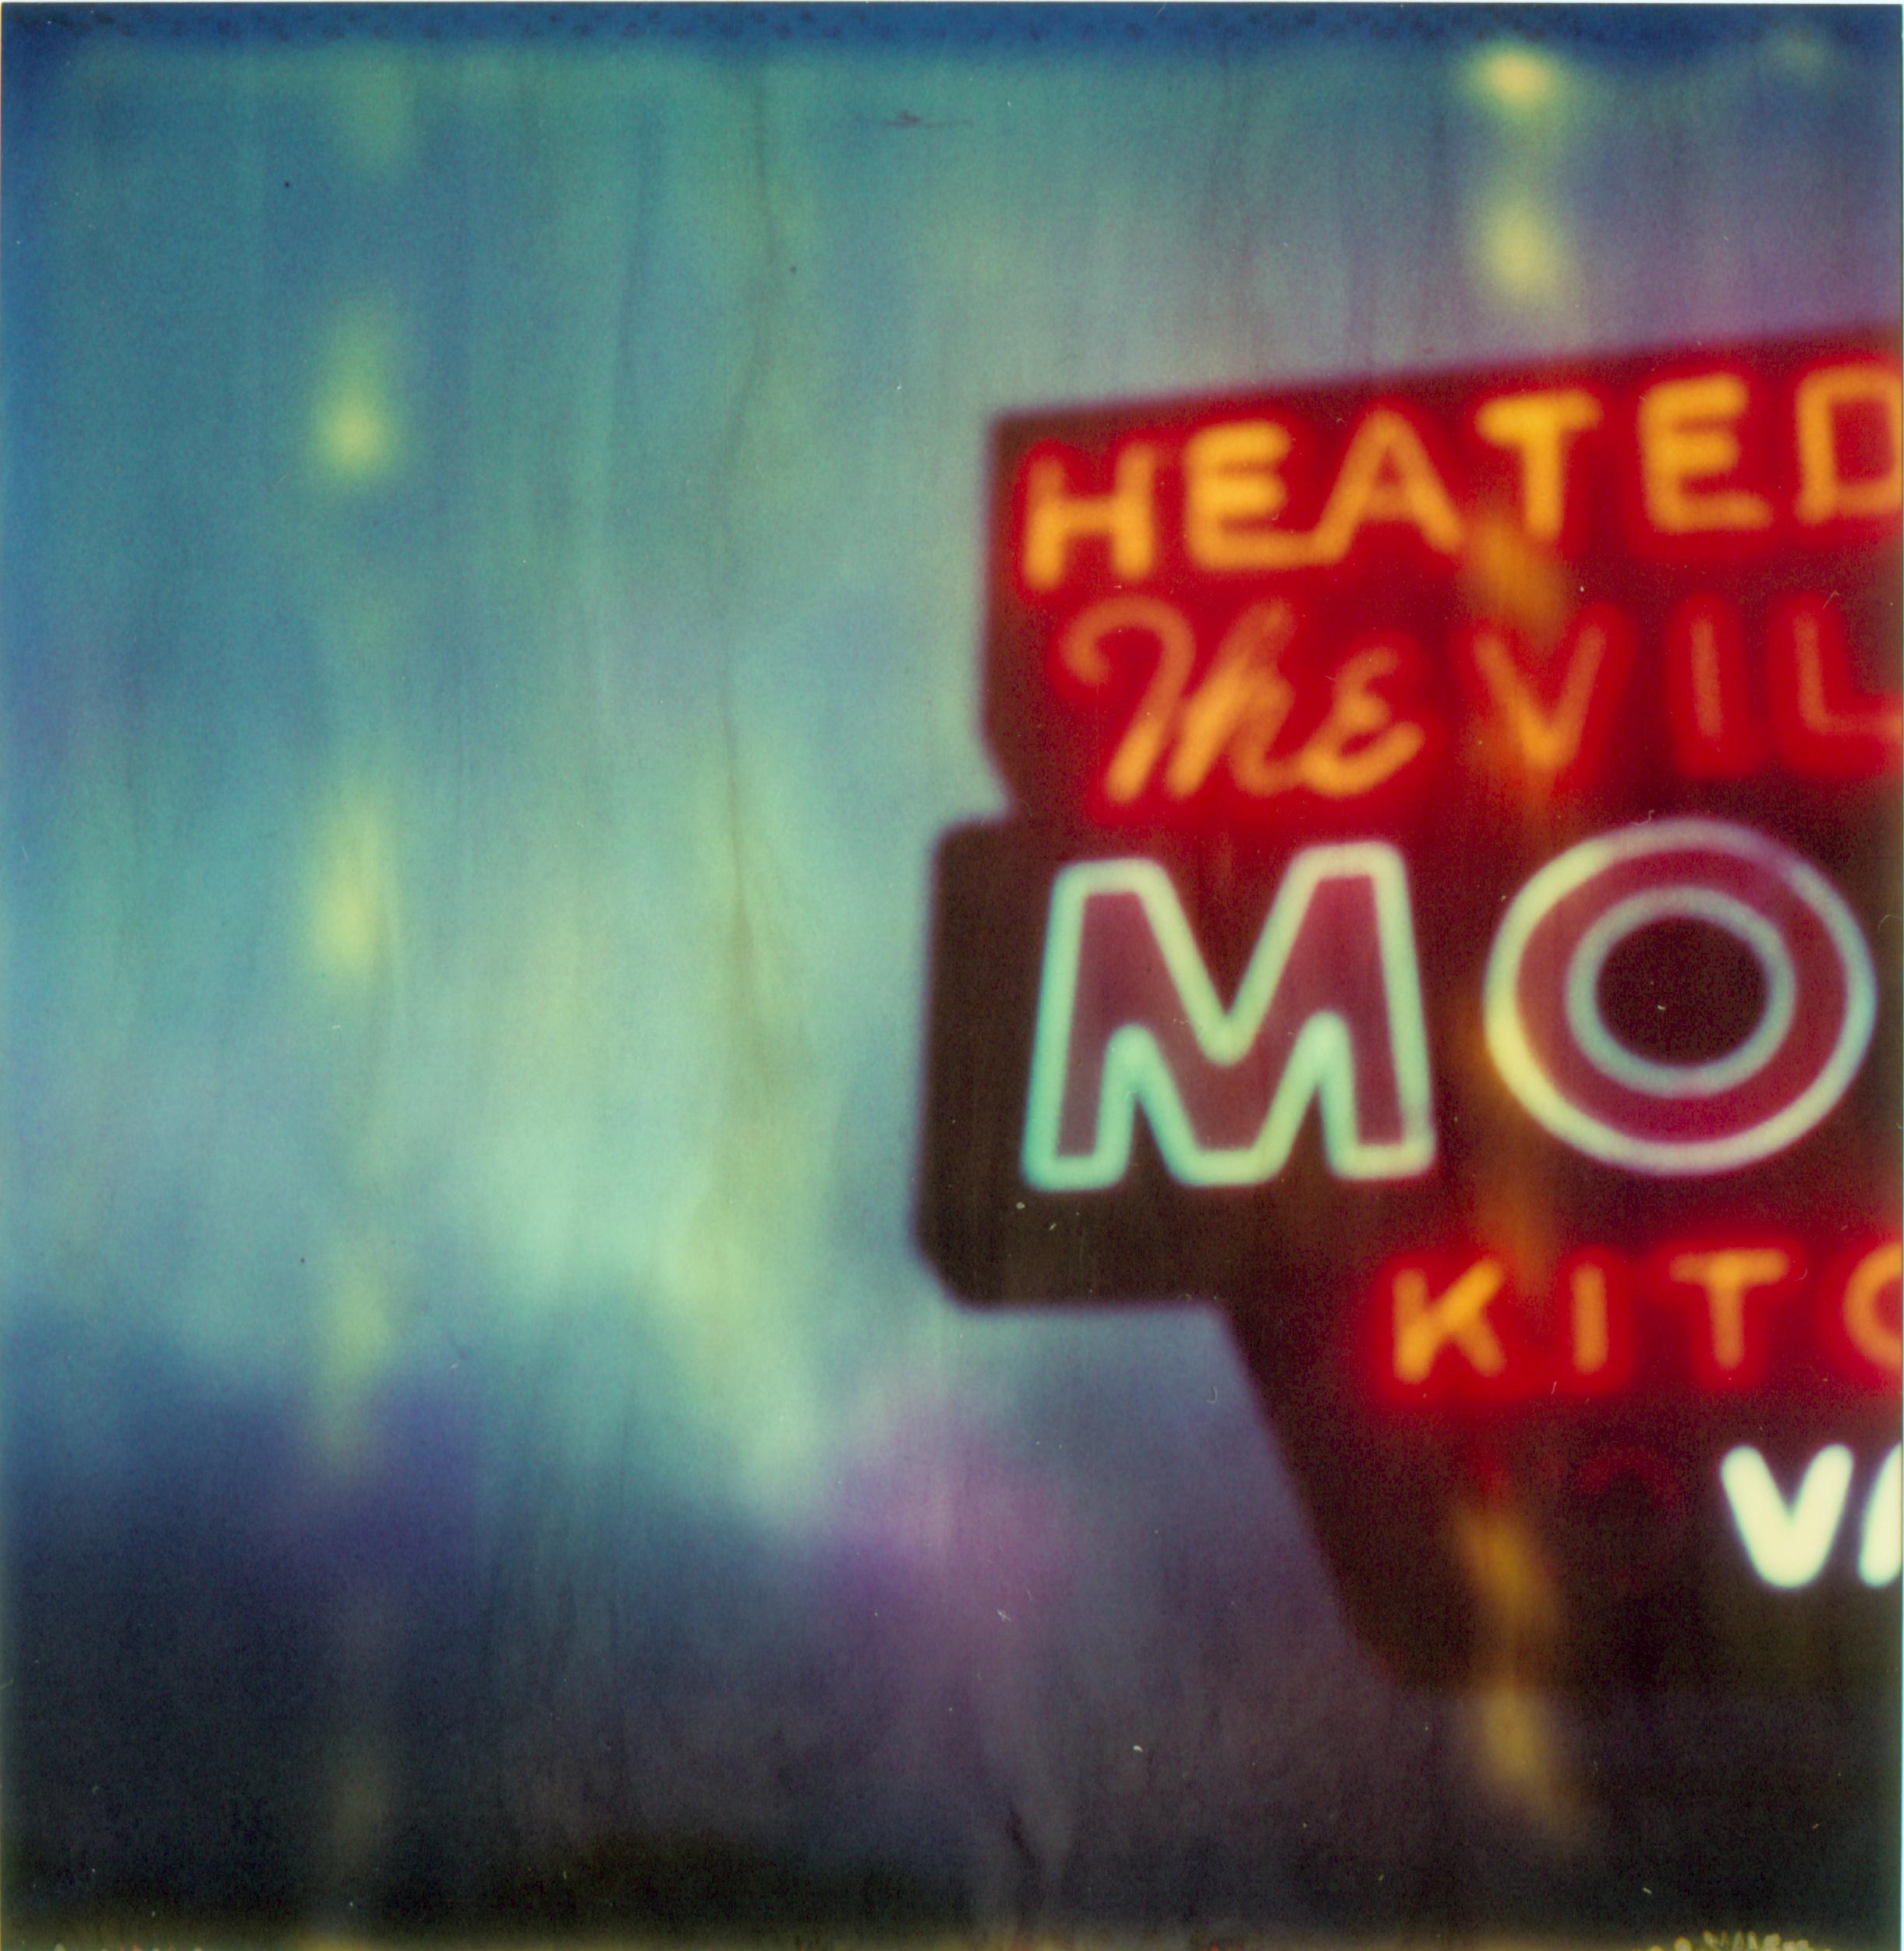 Stefanie Schneider Color Photograph - The Village Motel Blue (The Last Picture Show), analog, mounted